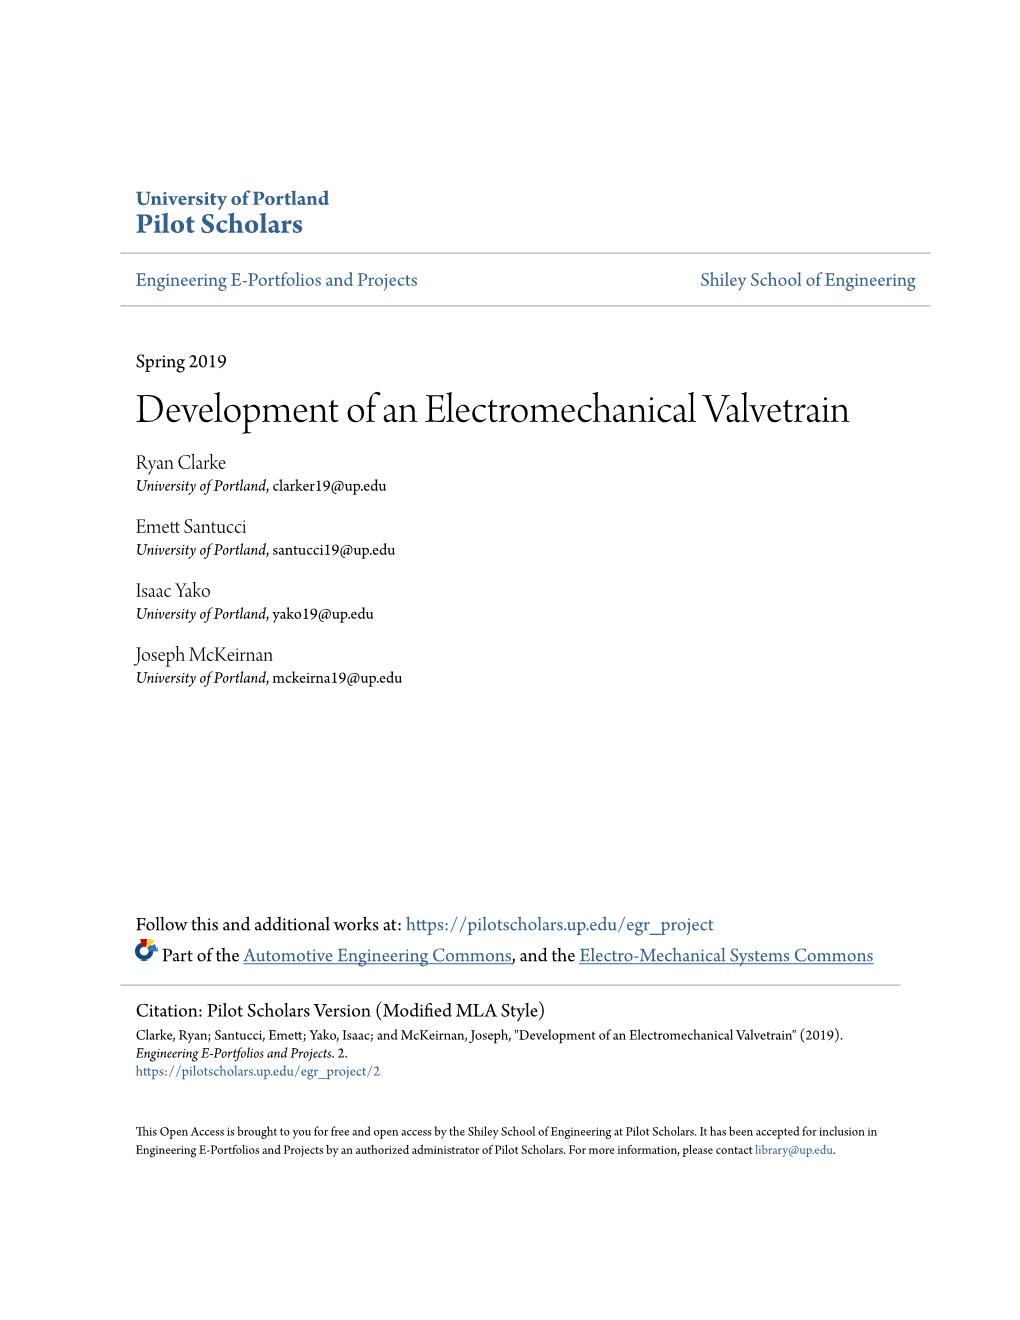 Development of an Electromechanical Valvetrain Ryan Clarke University of Portland, Clarker19@Up.Edu